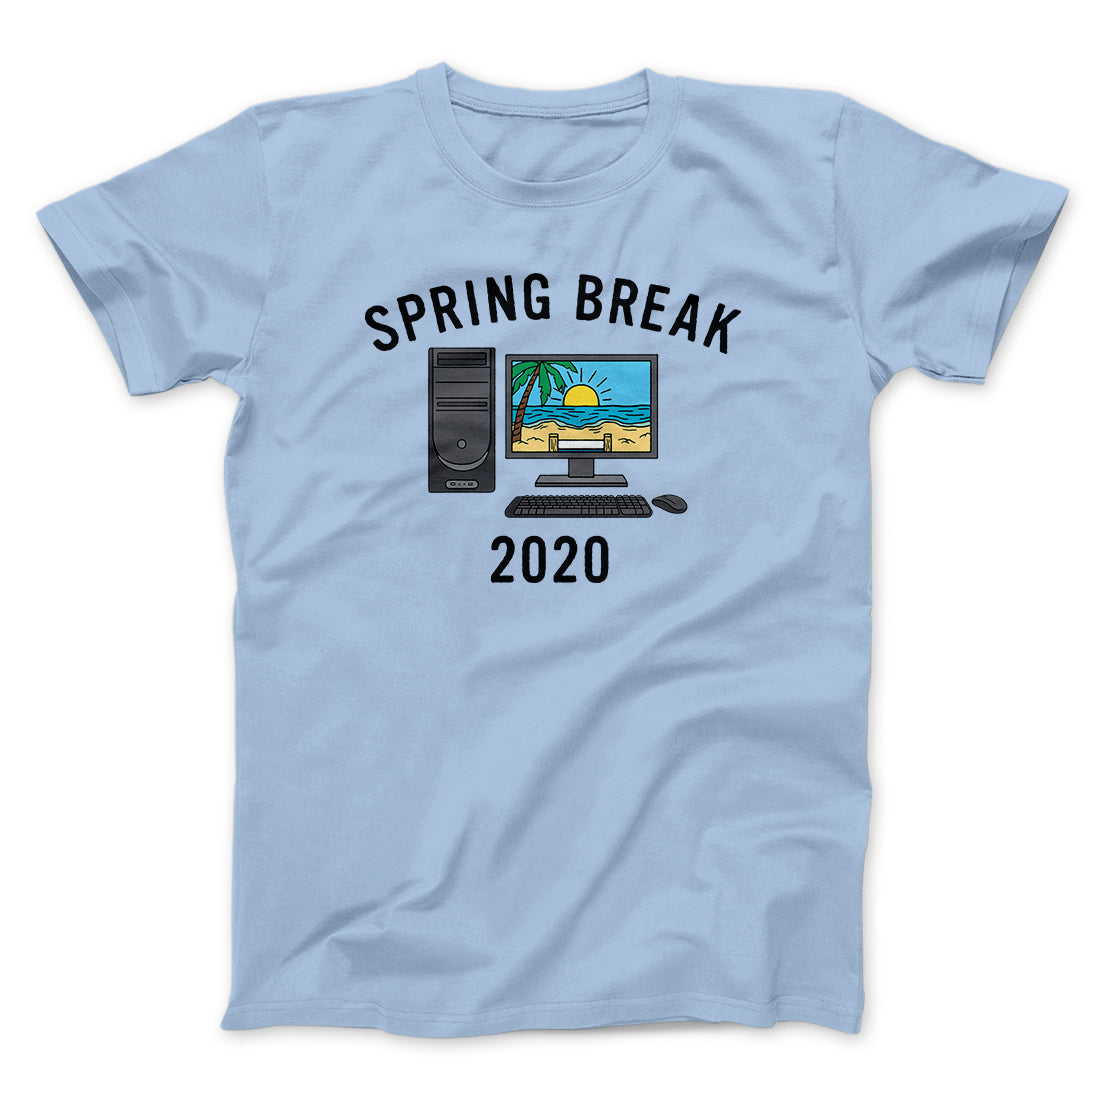 alex walkinshaw recommends Spring Break 2020 Shirts